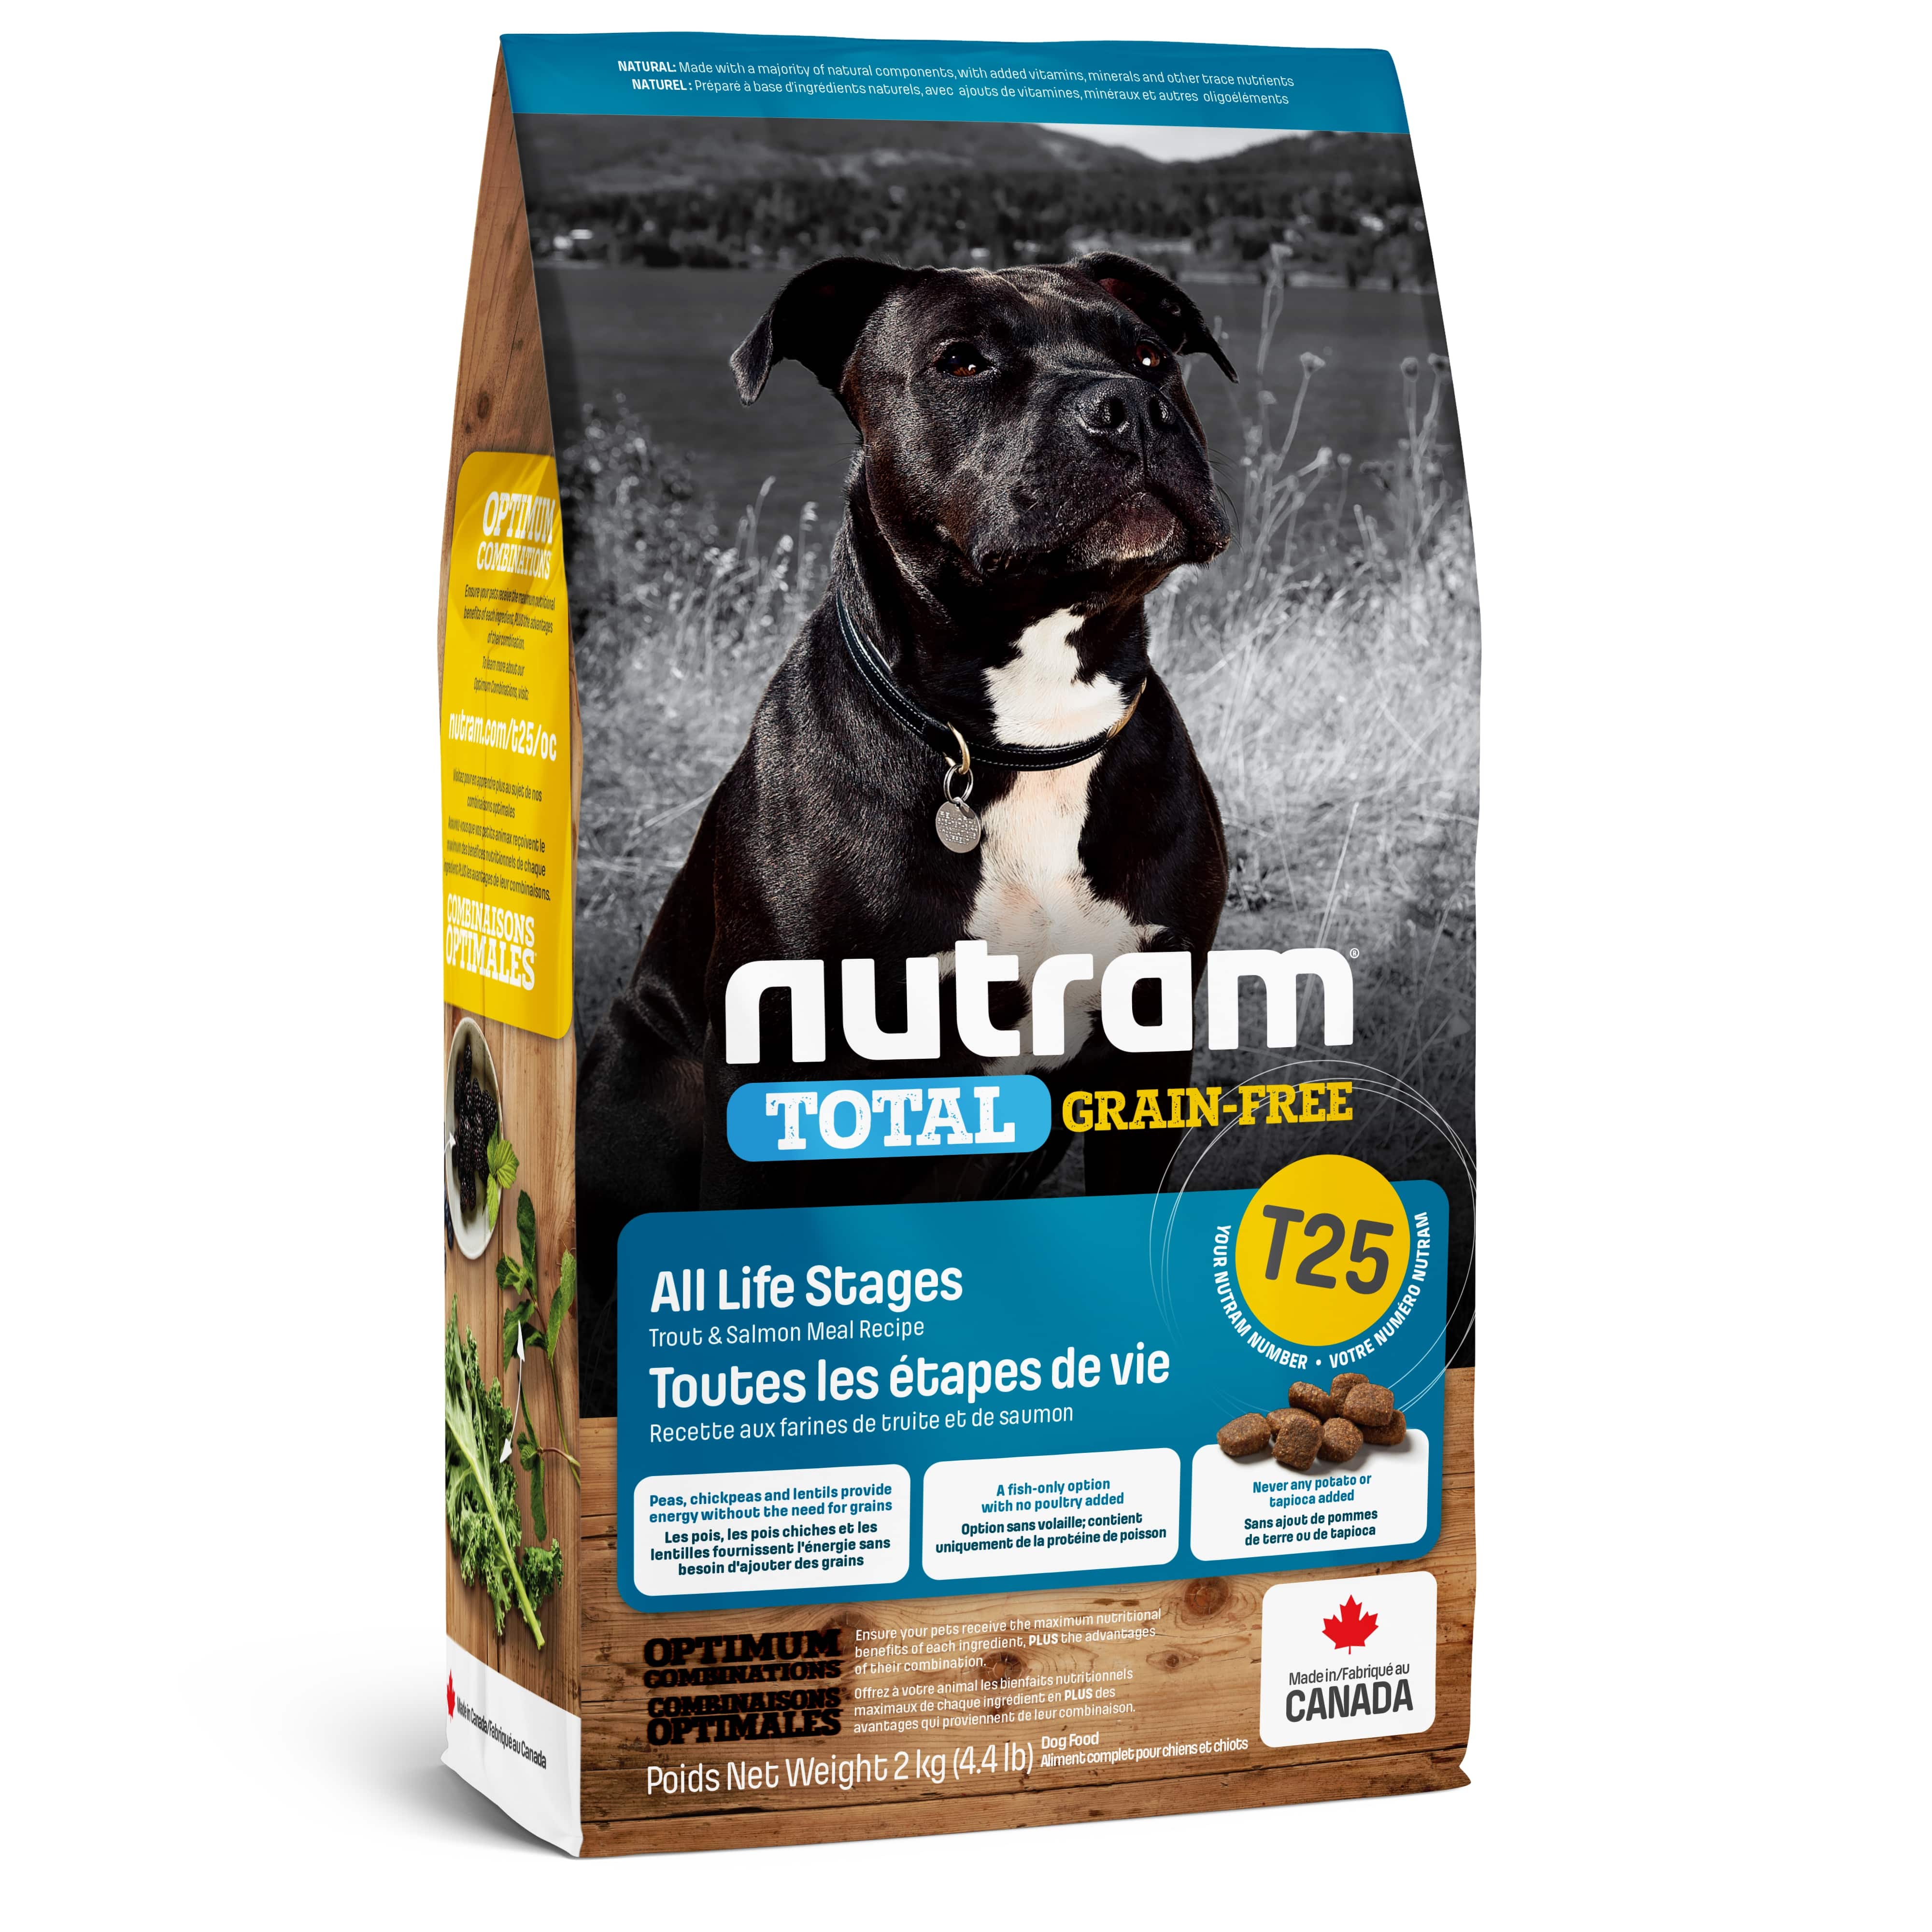  T25 Nutram Total Grain-Free® Salmon & Trout Dog Food